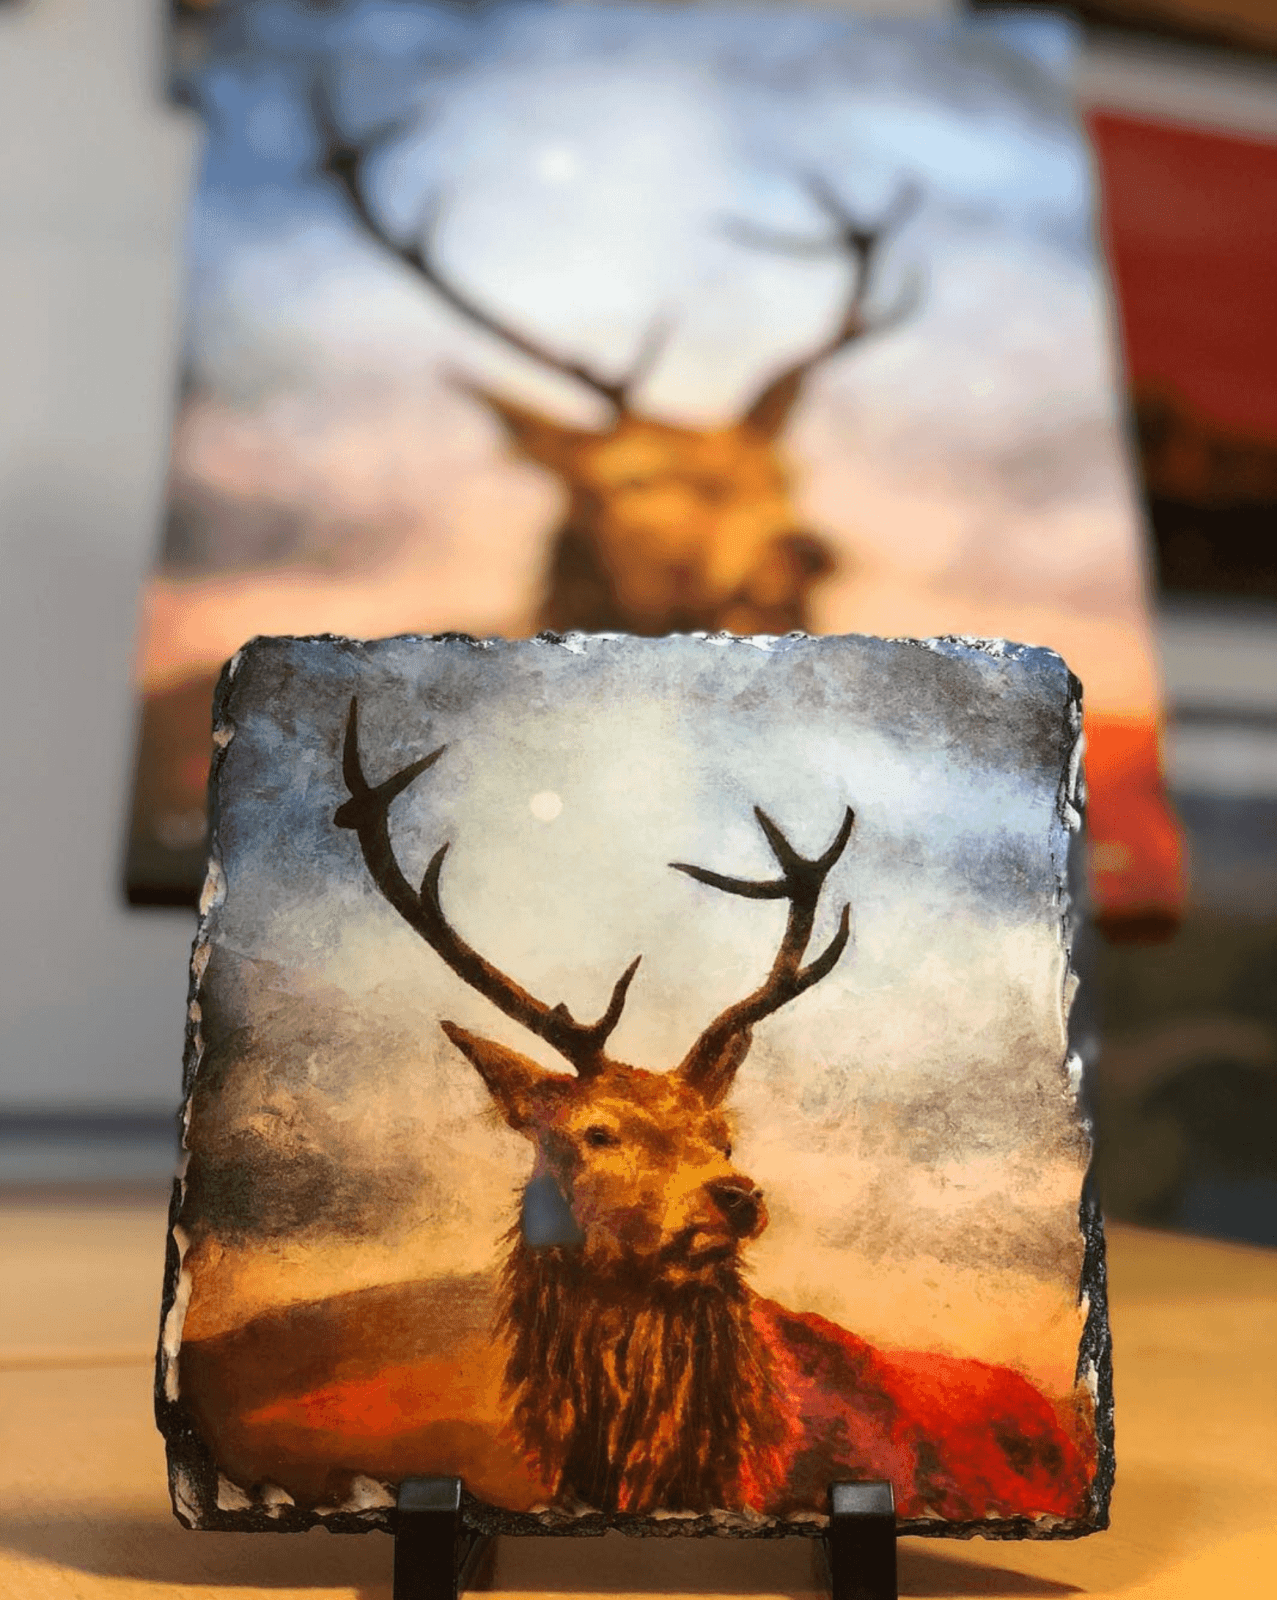 Talisker Bay Scottish Slate Art-Slate Art-Skye Art Gallery-Paintings, Prints, Homeware, Art Gifts From Scotland By Scottish Artist Kevin Hunter